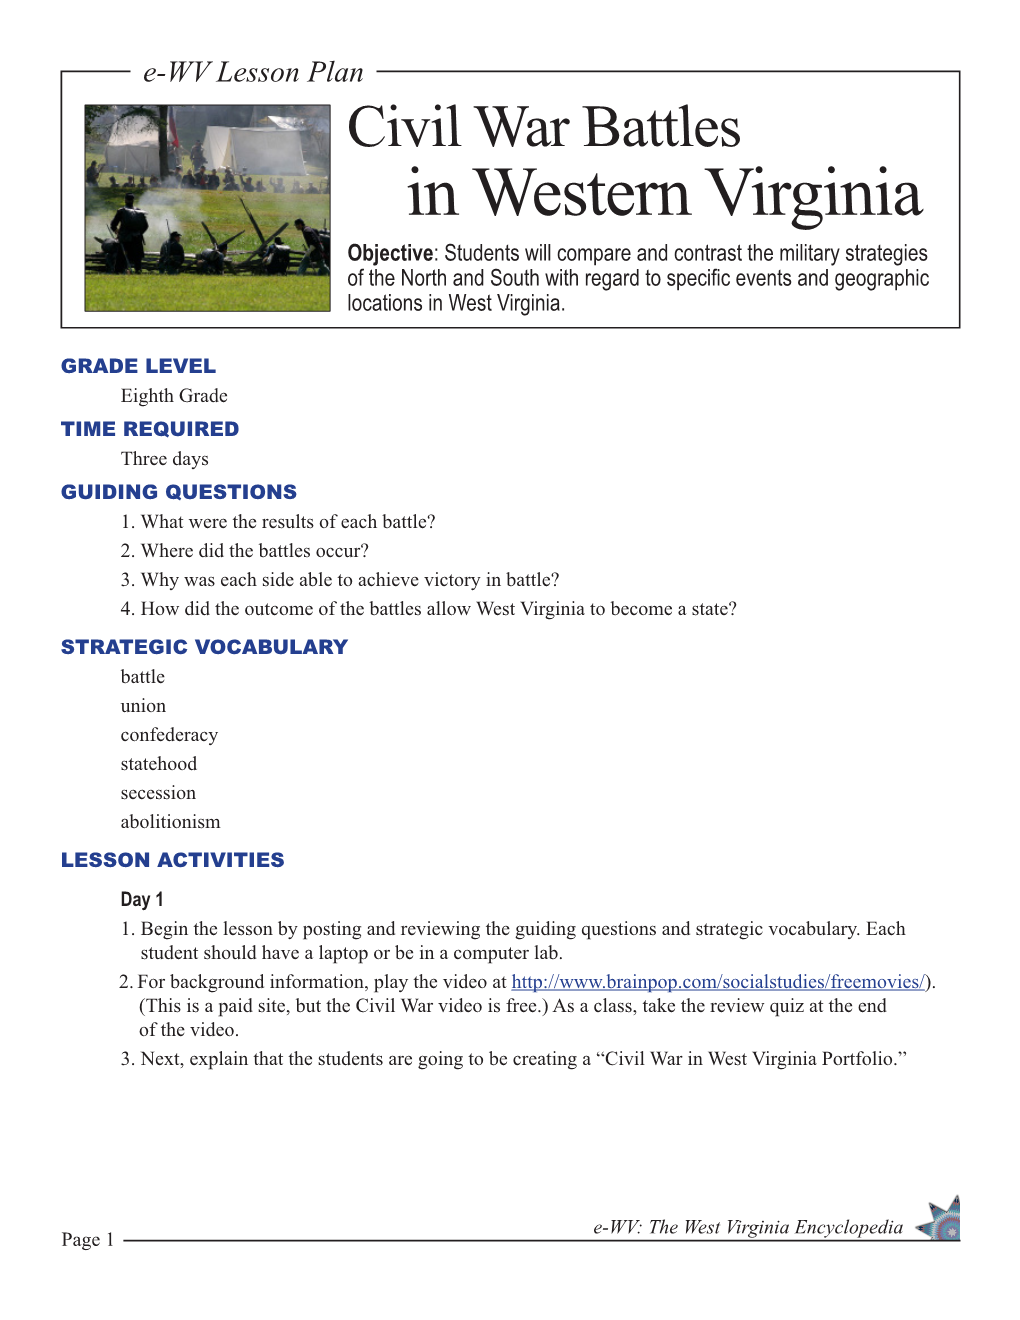 Civil War Battles in Western Virginia